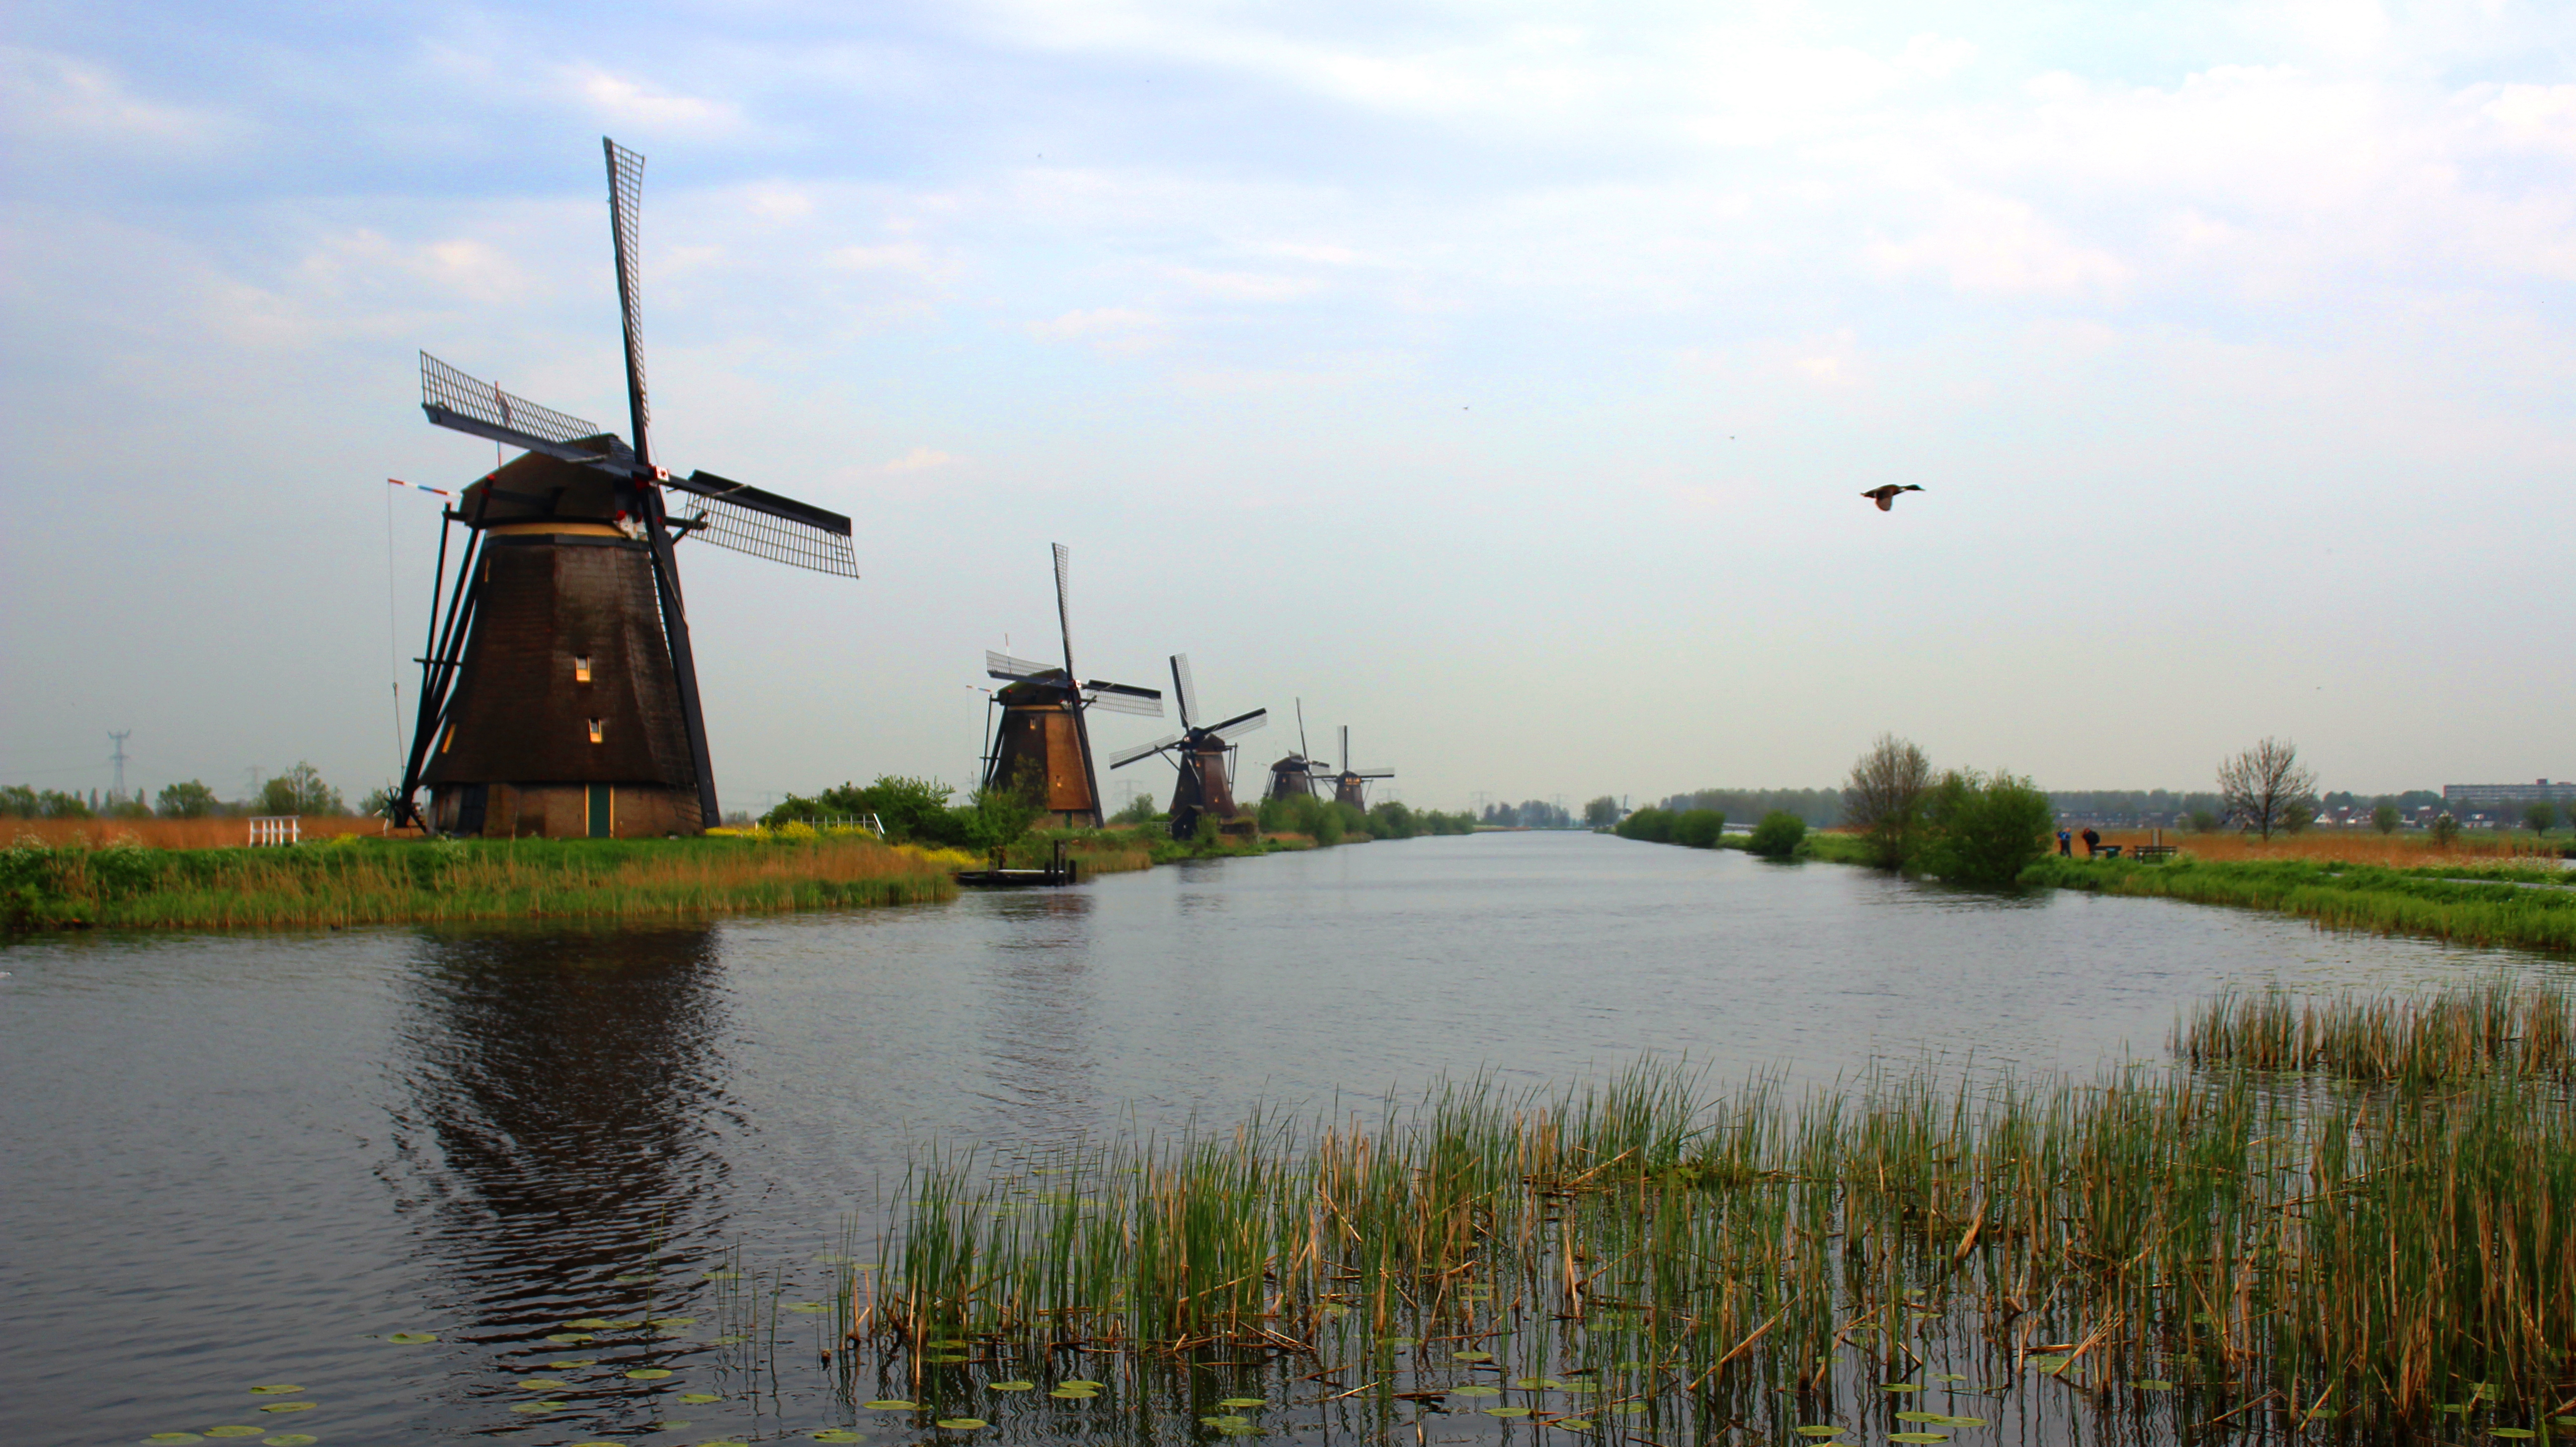 rotterdam netherlands - Google Search | Rotterdam Netherlands ...